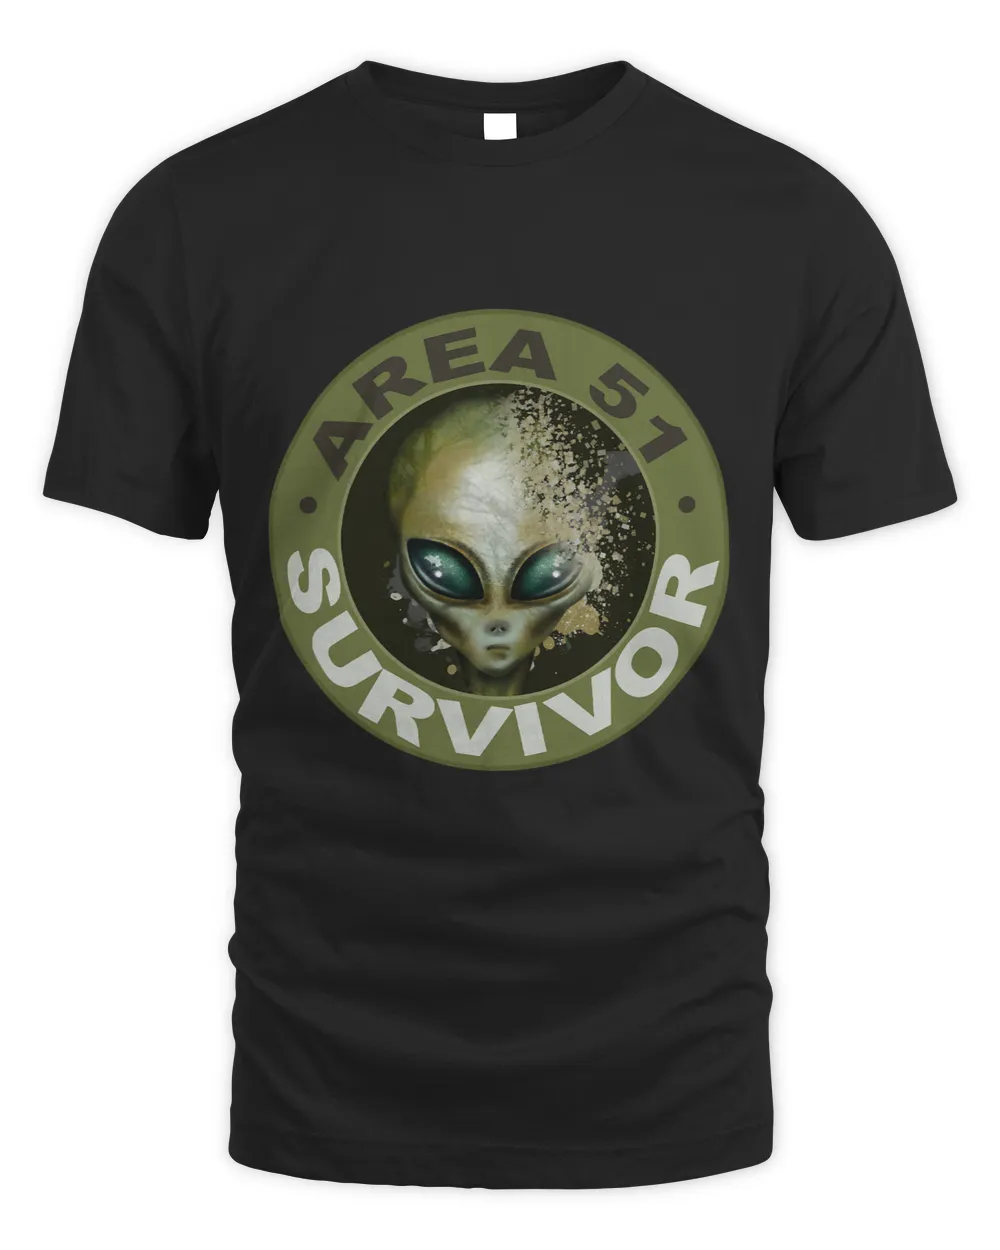 Area 51 Survivor UFO Alien Evolution Design